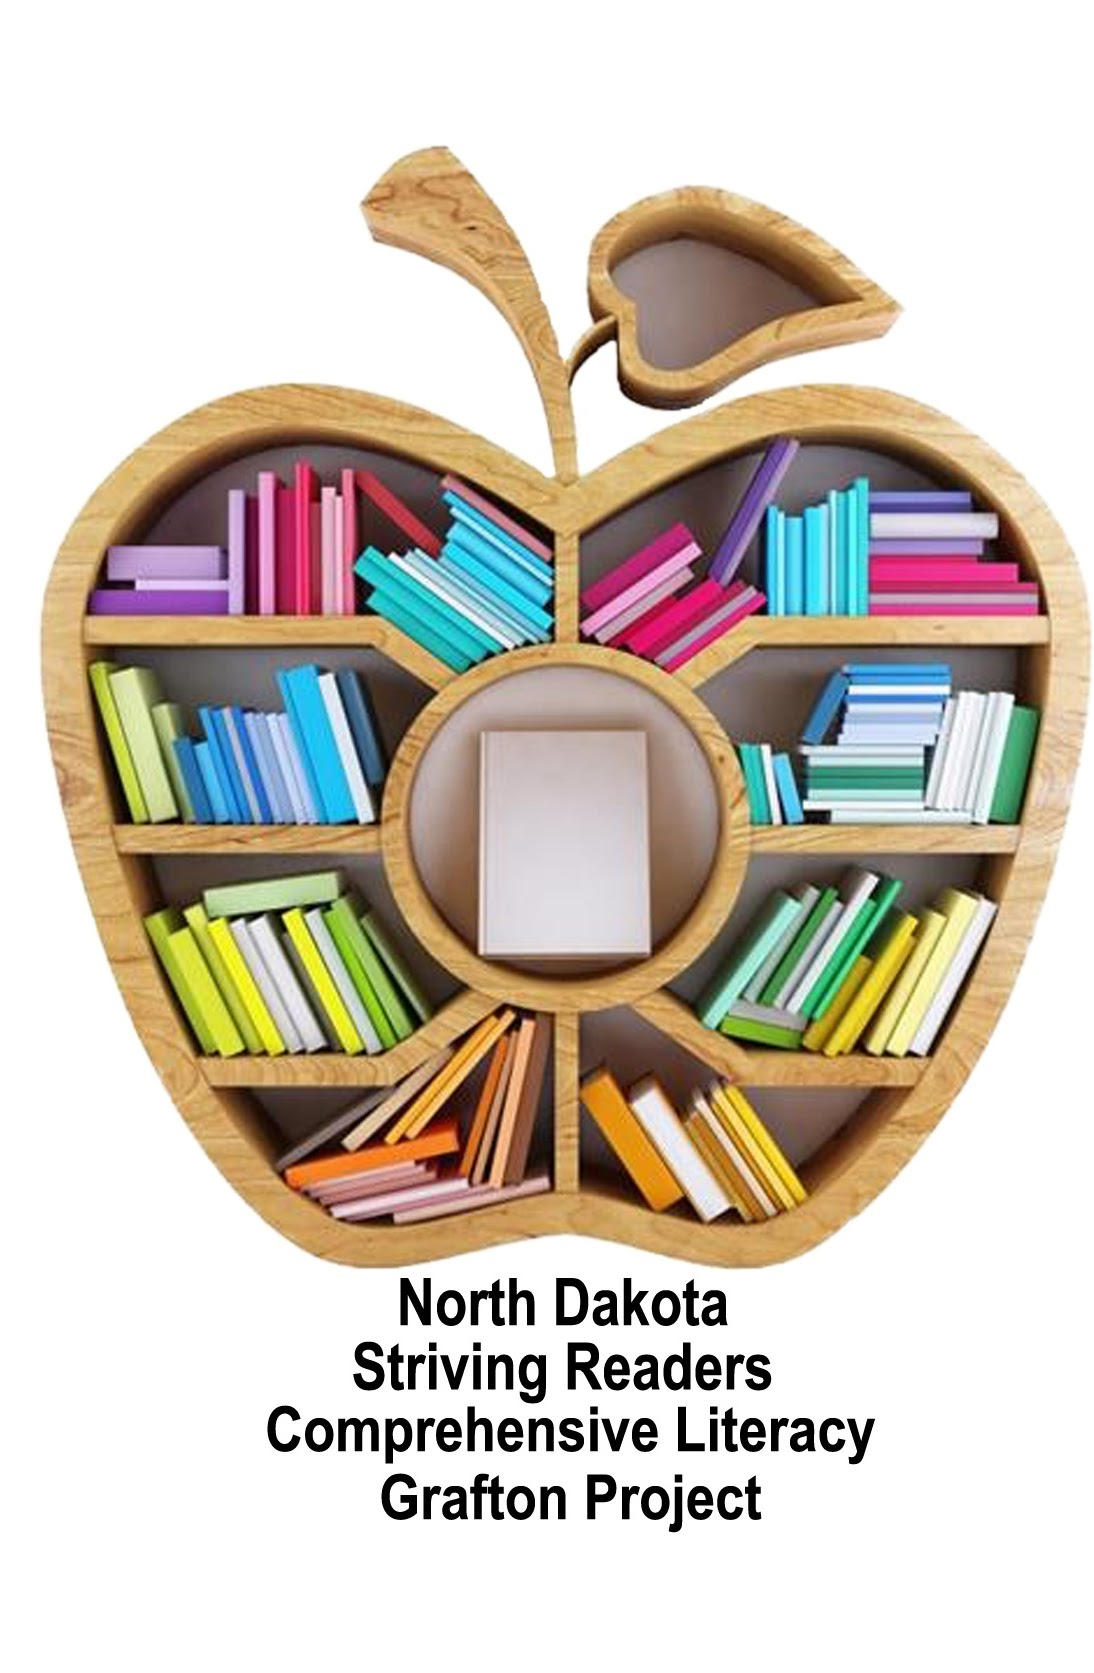 North Dakota Striving Readers Grant Project